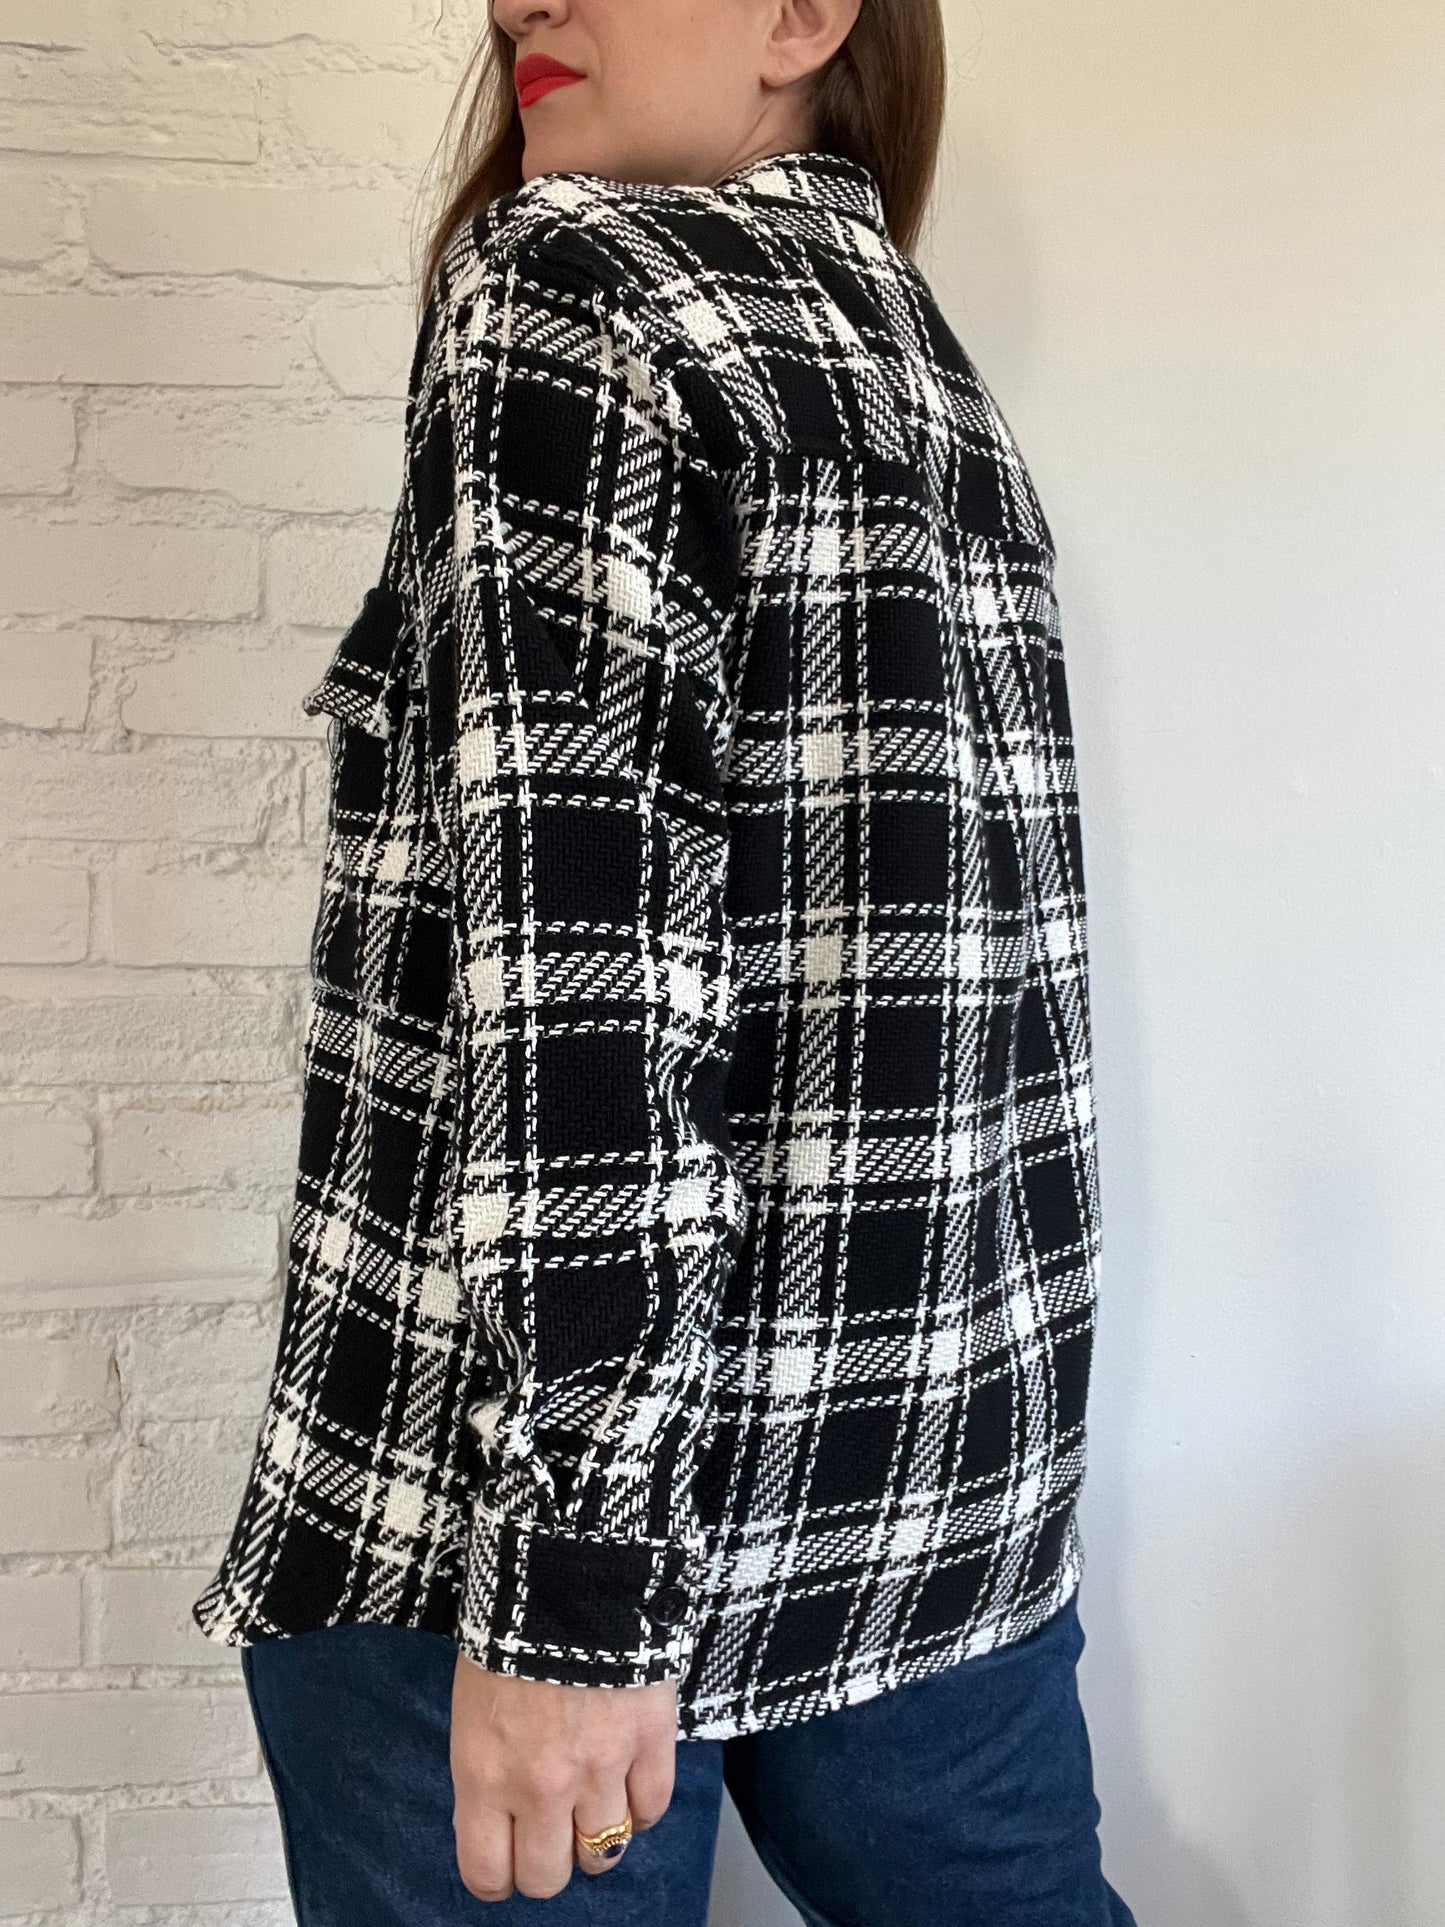 B&W Checkered Shirt Jacket - XL